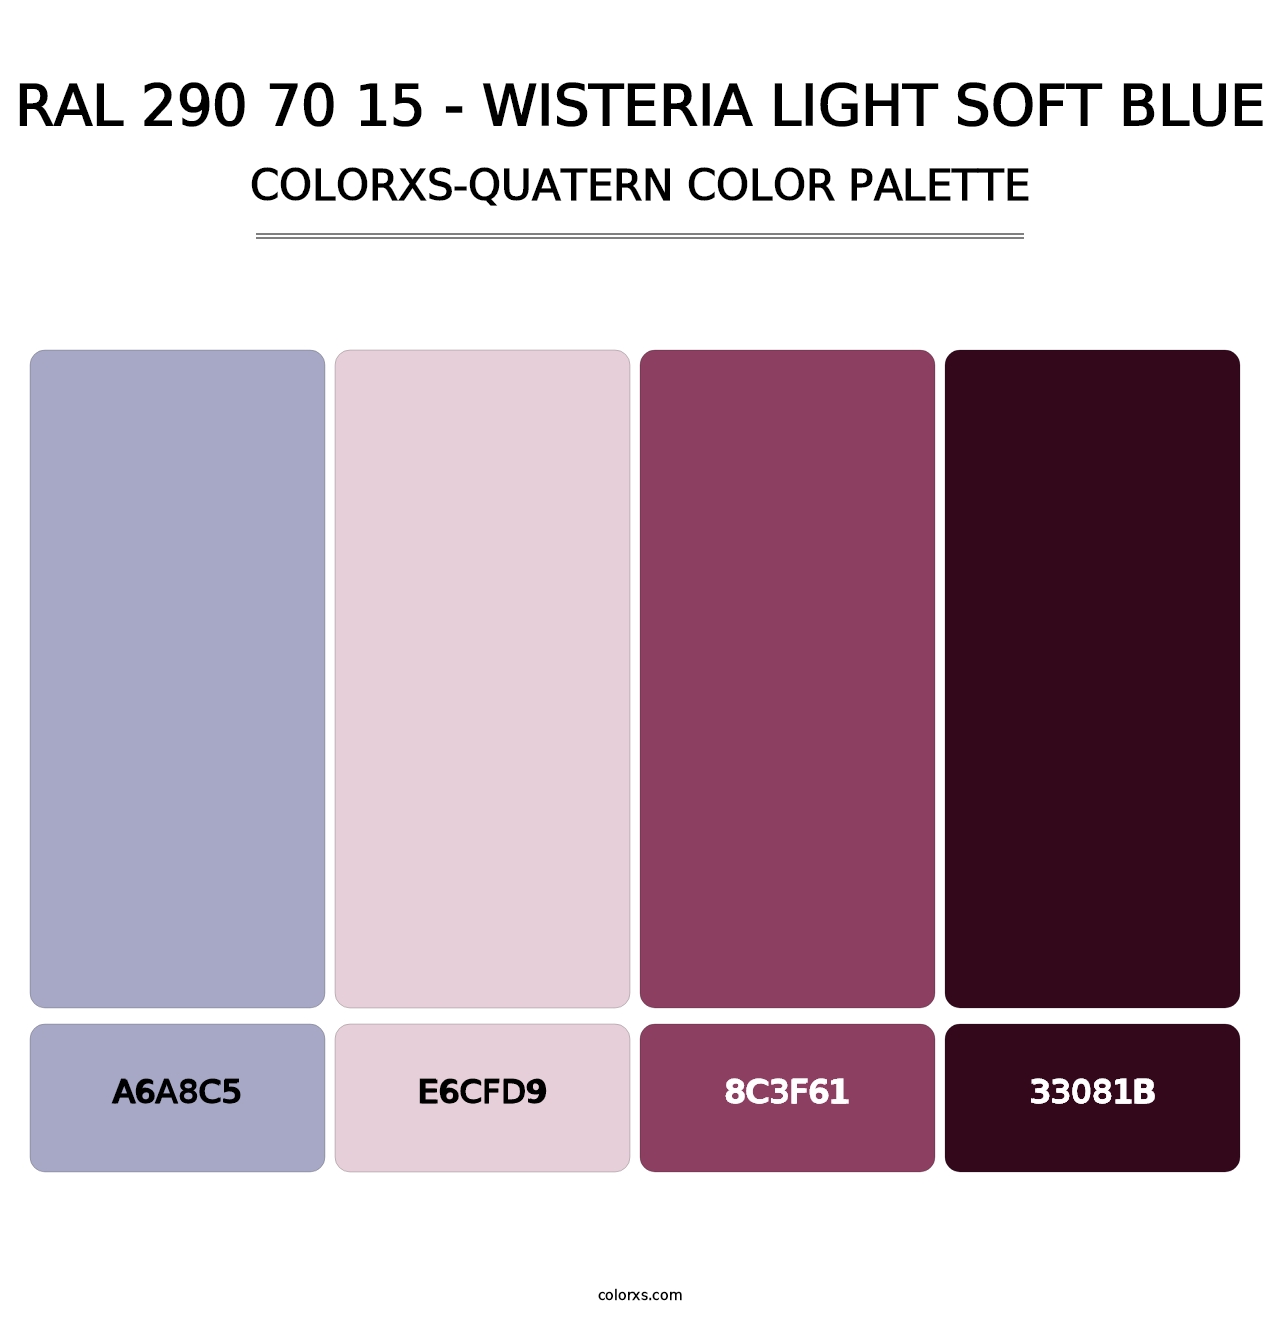 RAL 290 70 15 - Wisteria Light Soft Blue - Colorxs Quatern Palette